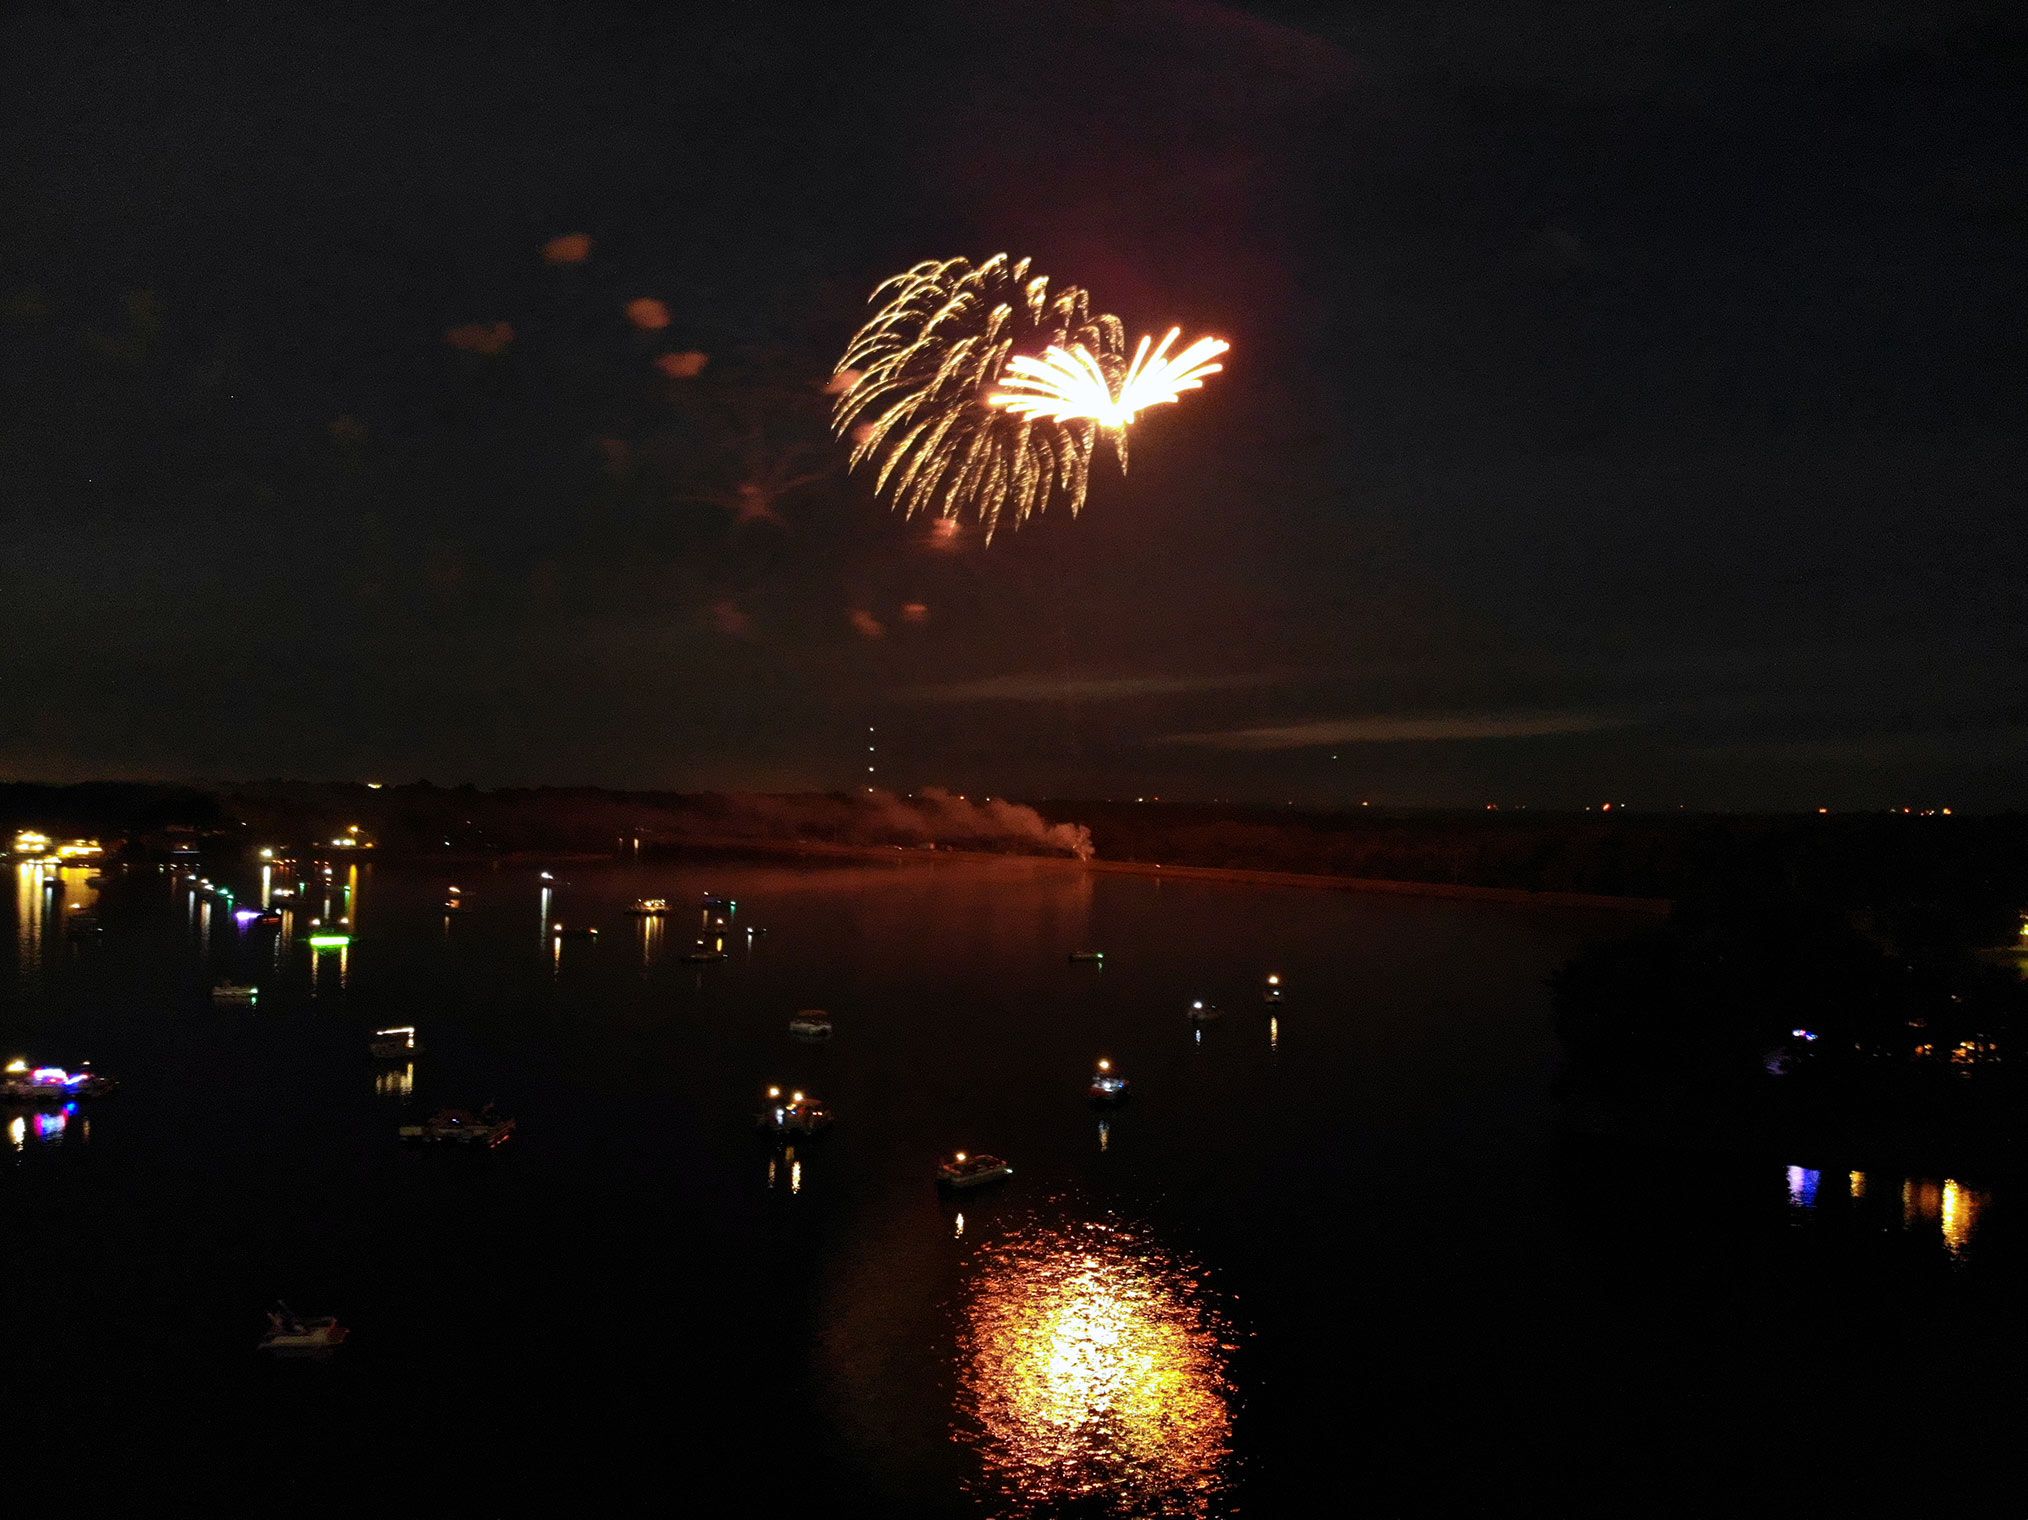 A fireworks display over Lakeland Lake